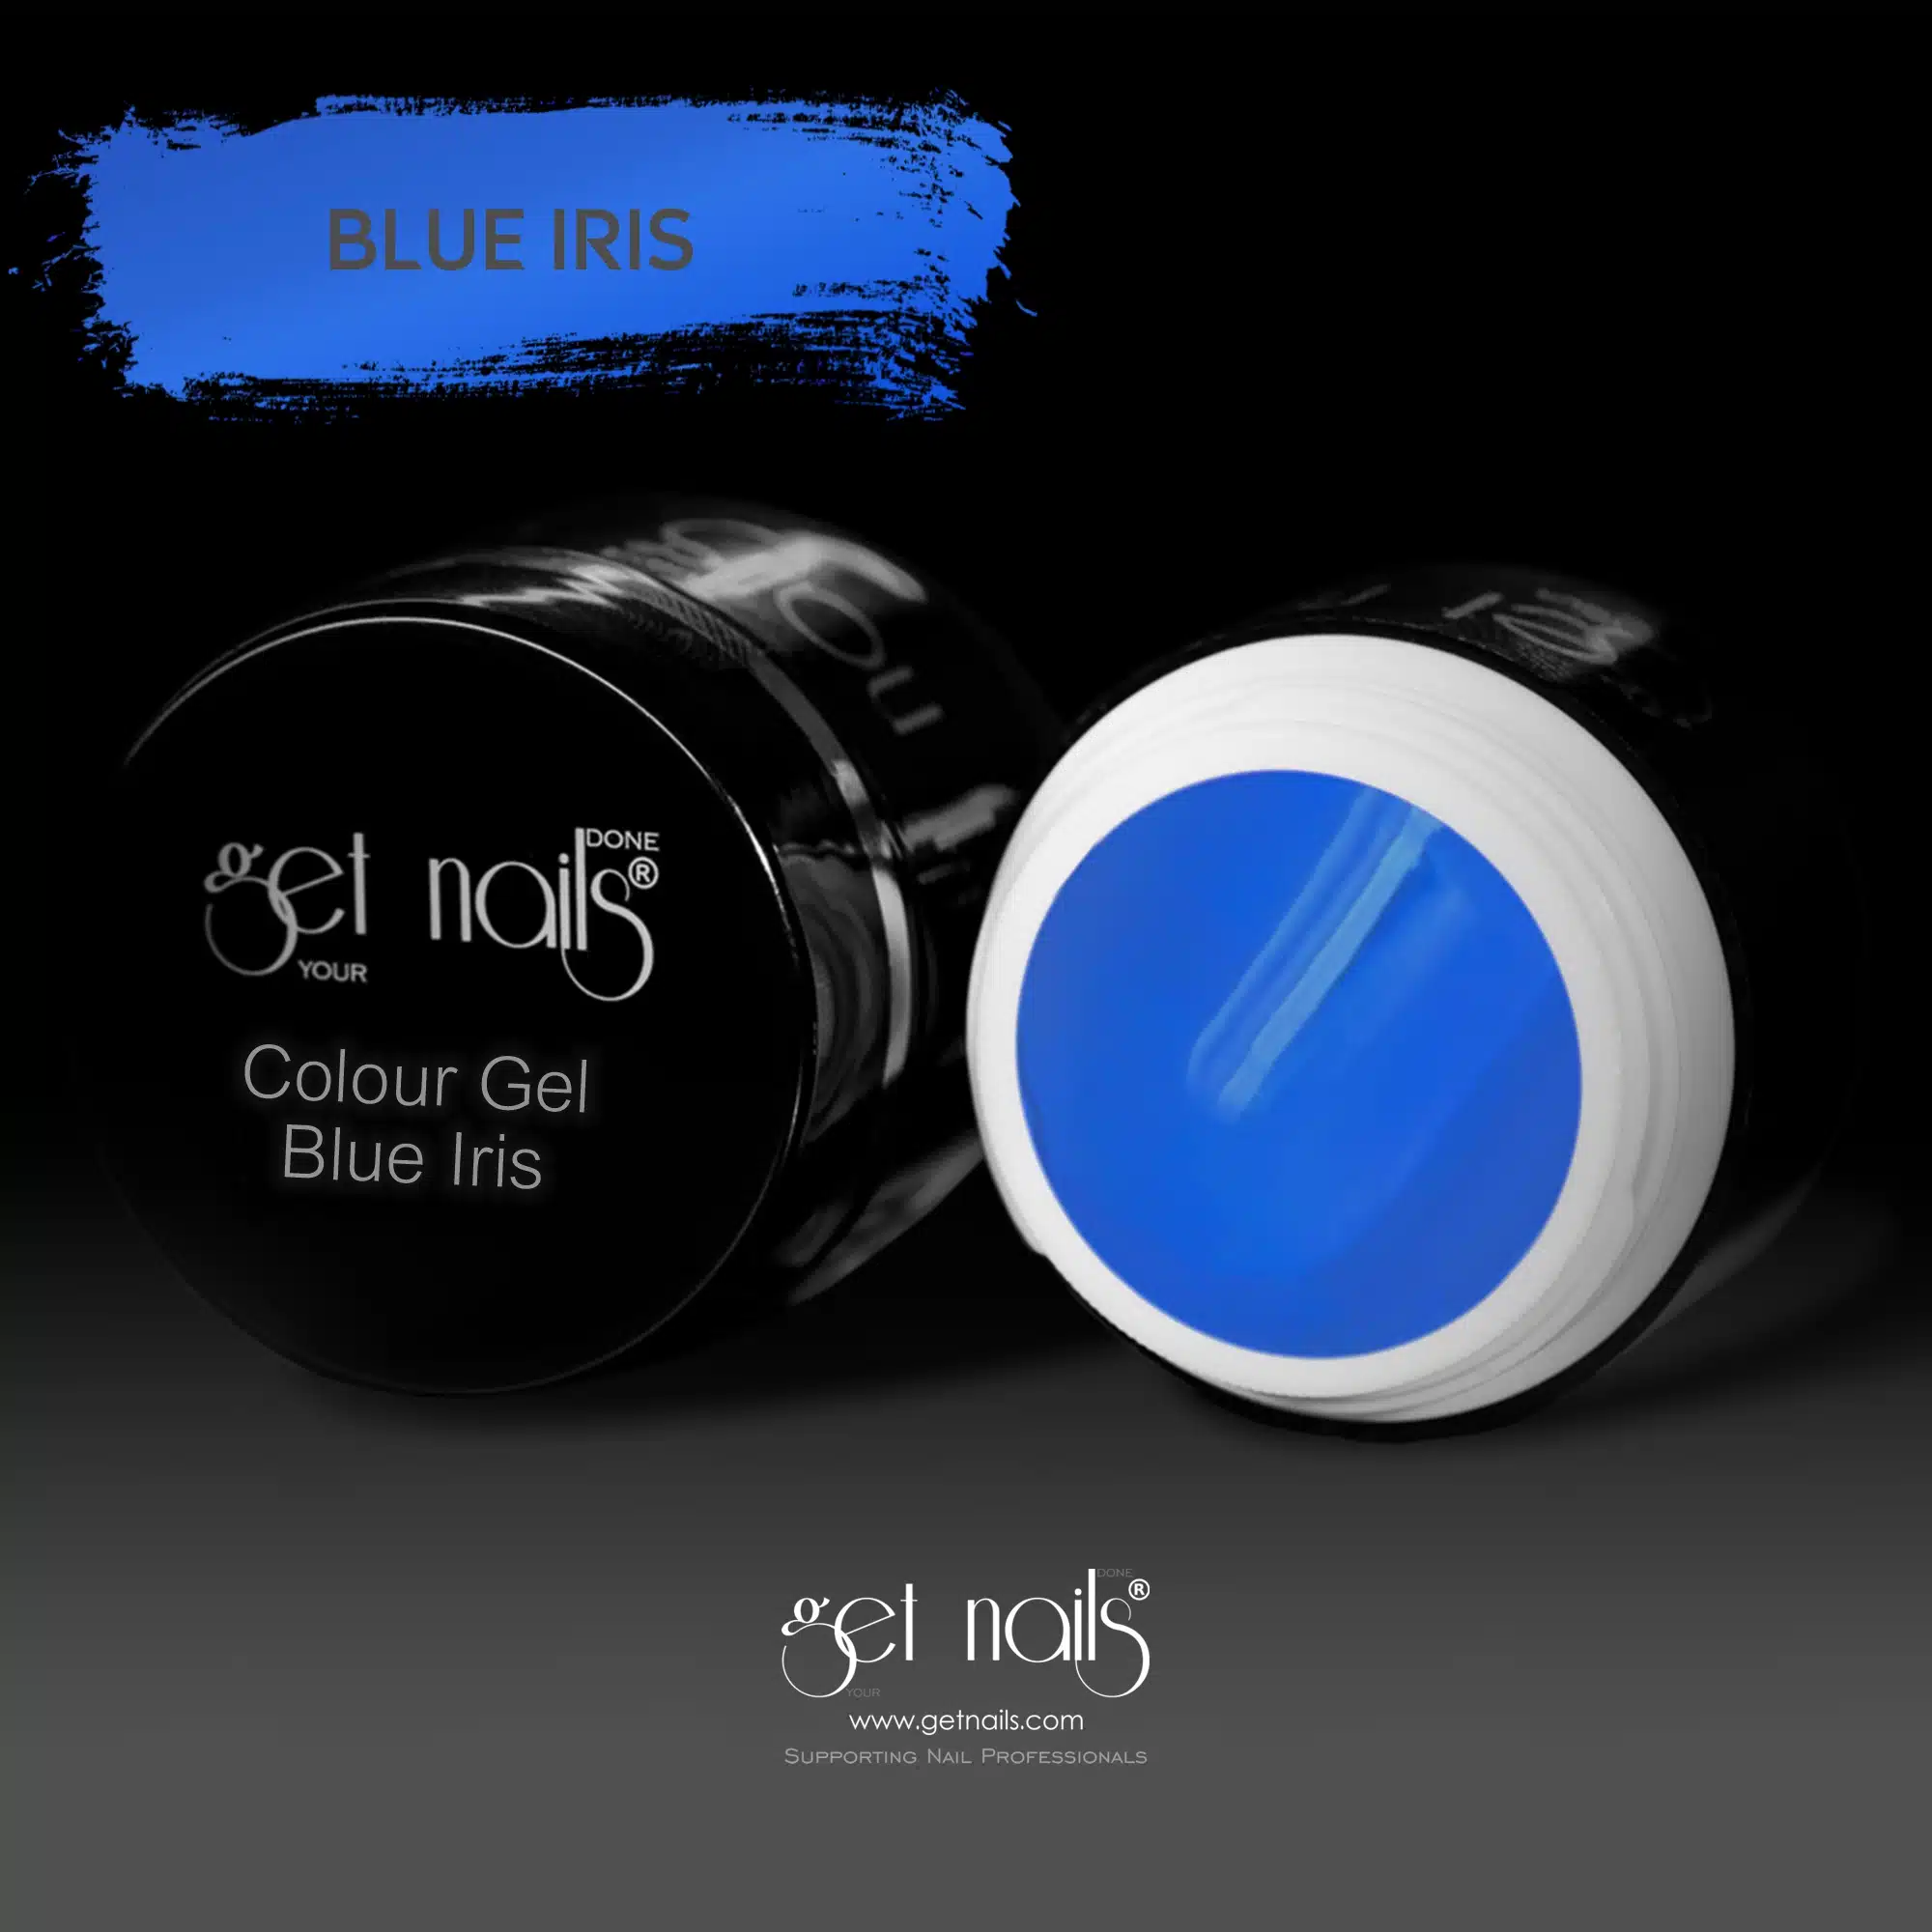 Get Nails Austria - Colour Gel Blue Iris 5g